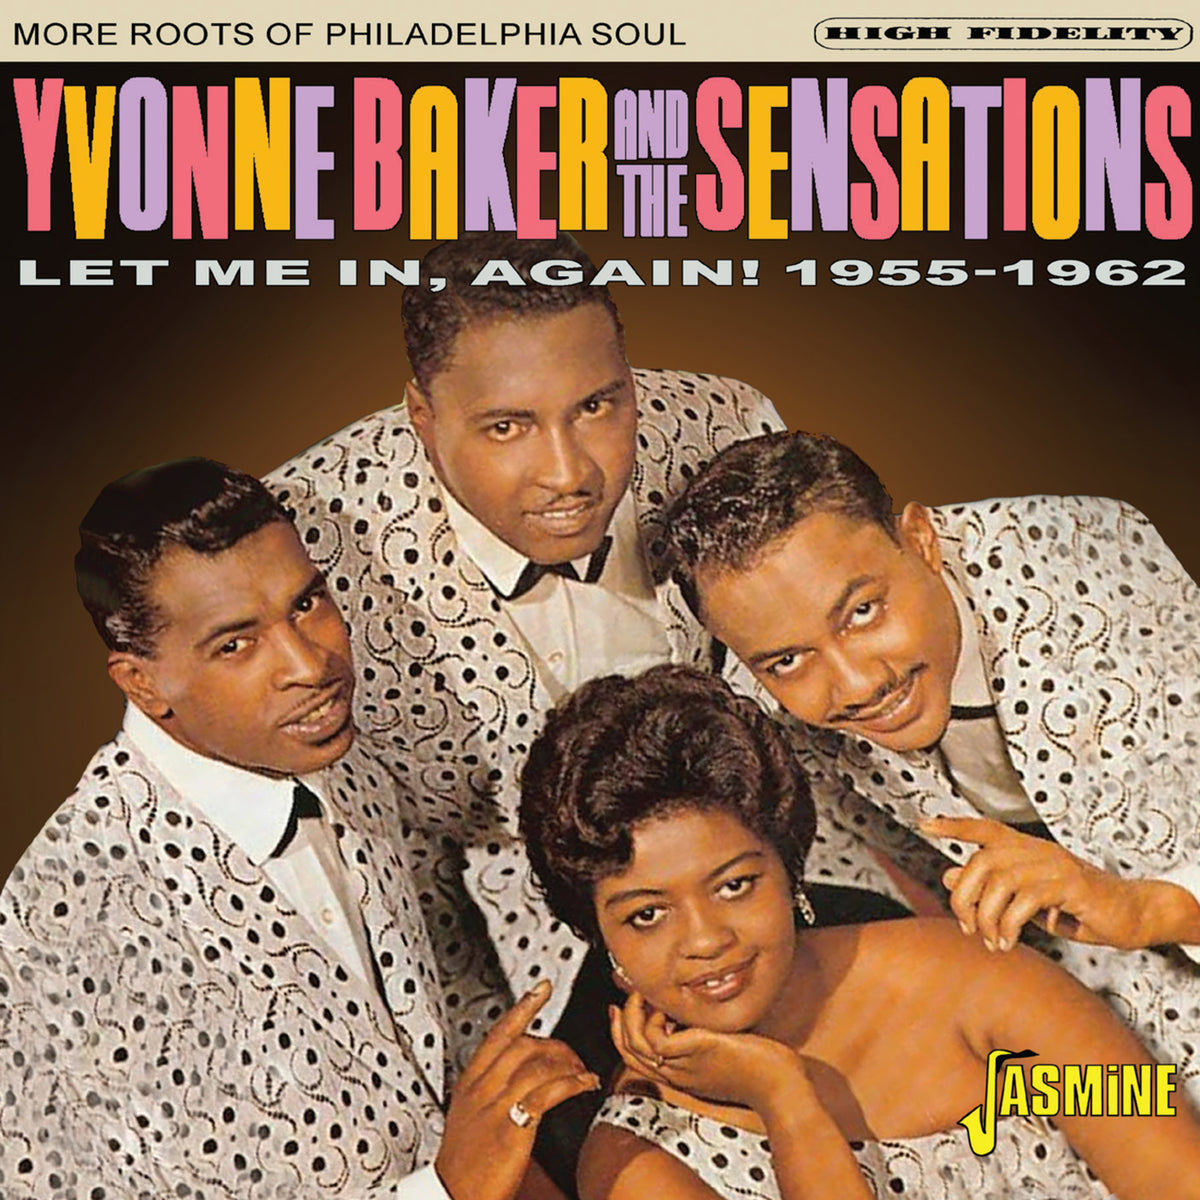 Yvonne Baker &amp; The Sensations - Let Me In, Again! 1955-1962 More Roots of Philadelphia Soul